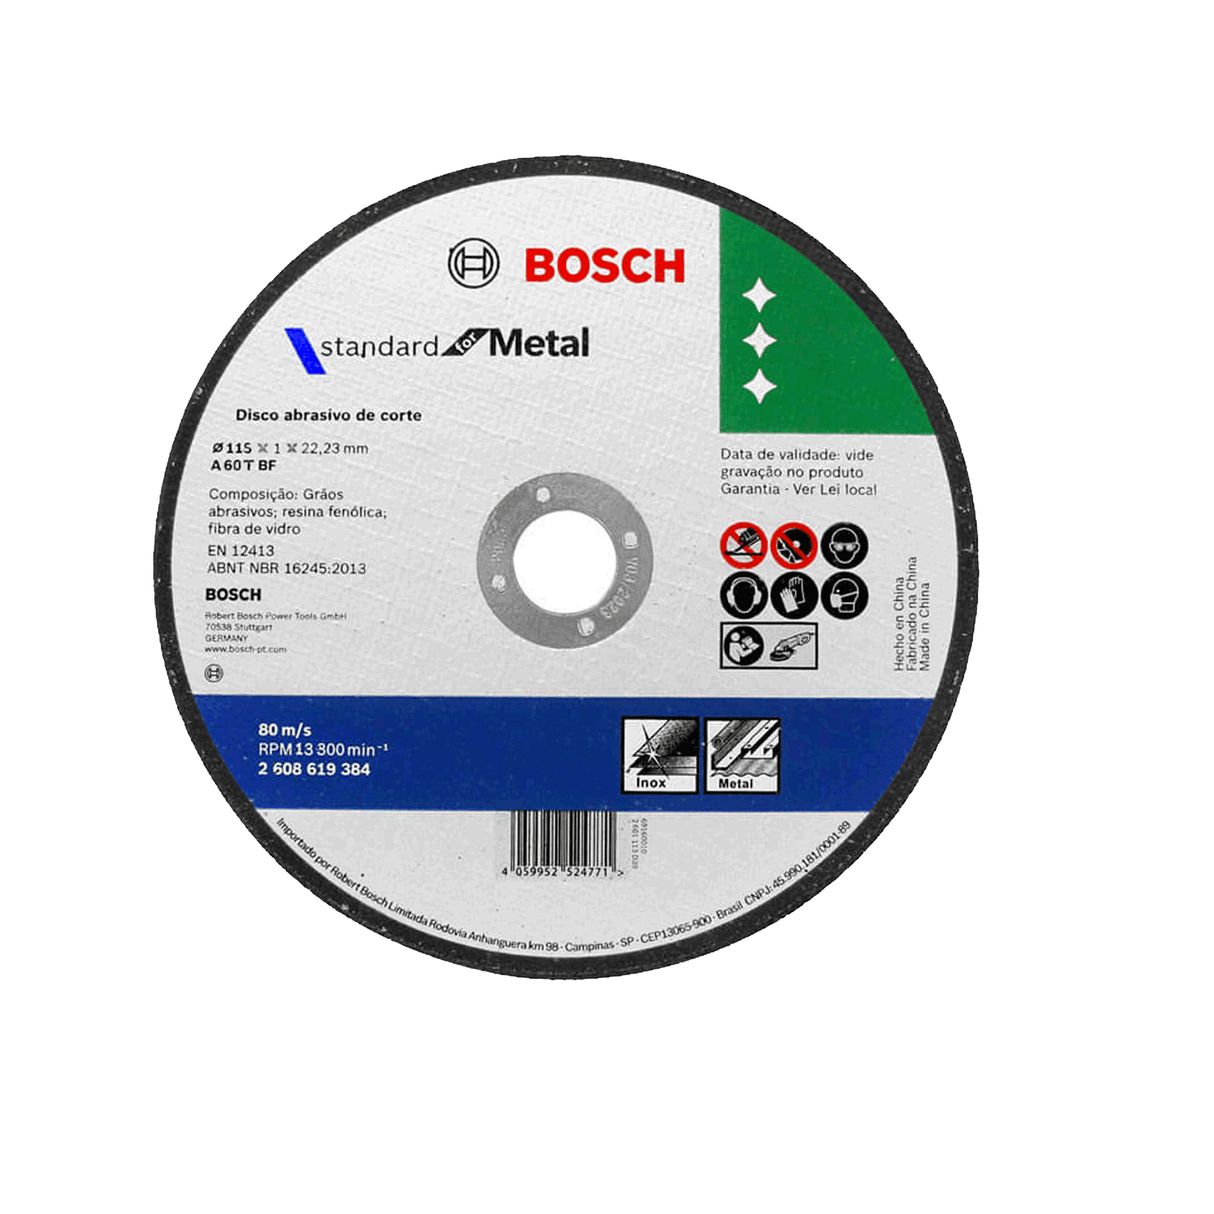 Combo Esmeriladora Black and Decker G720 820 W | Discos de Corte Bosch 4 1/2"